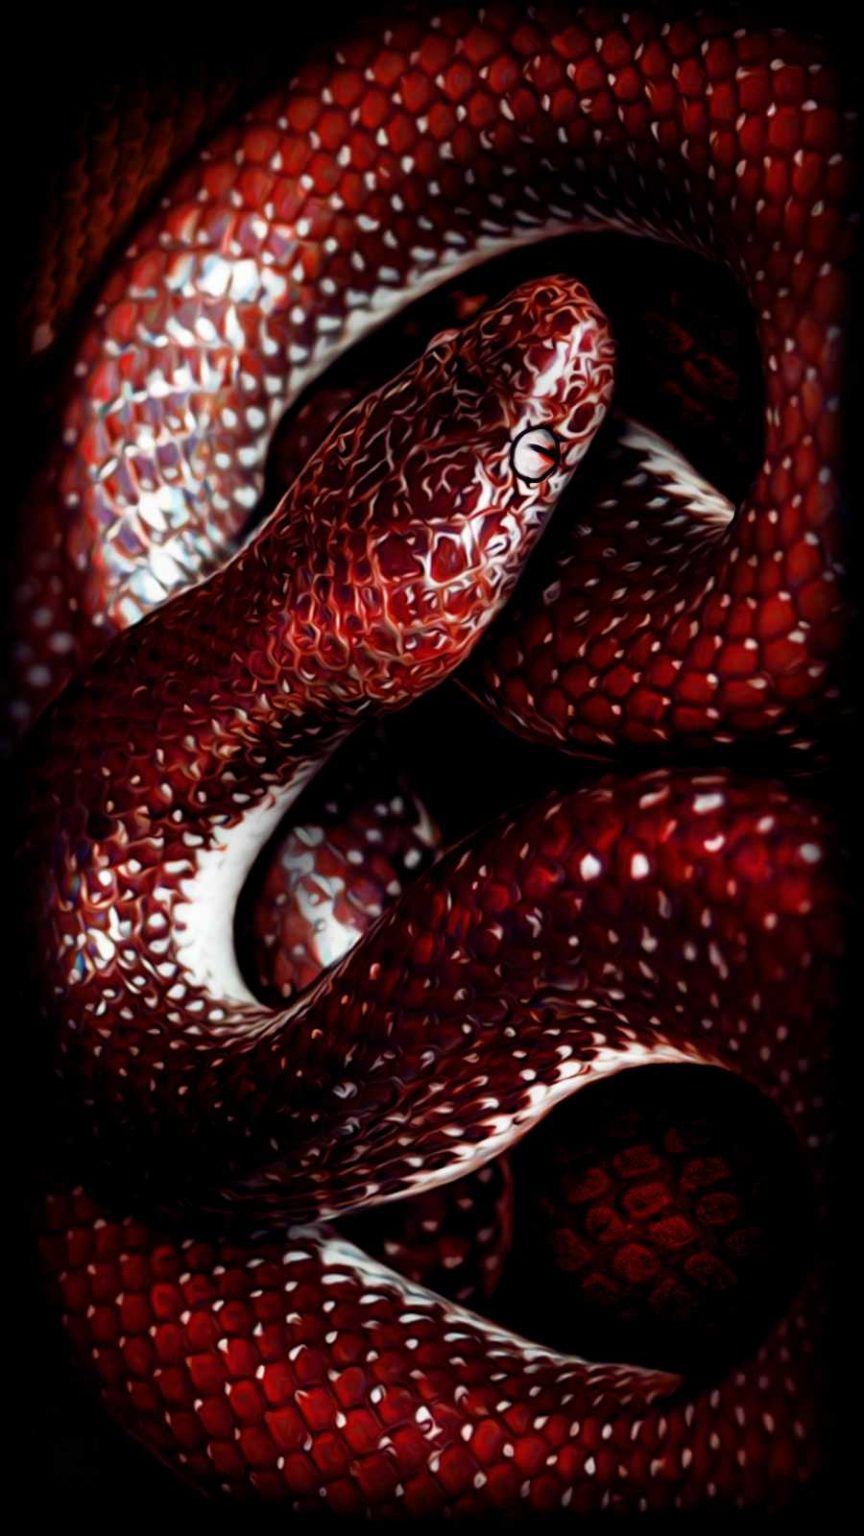 Animal Wallpaper Wallpaper, iPhone Wallpaper. Snake wallpaper, Red and black wallpaper, Wild animal wallpaper